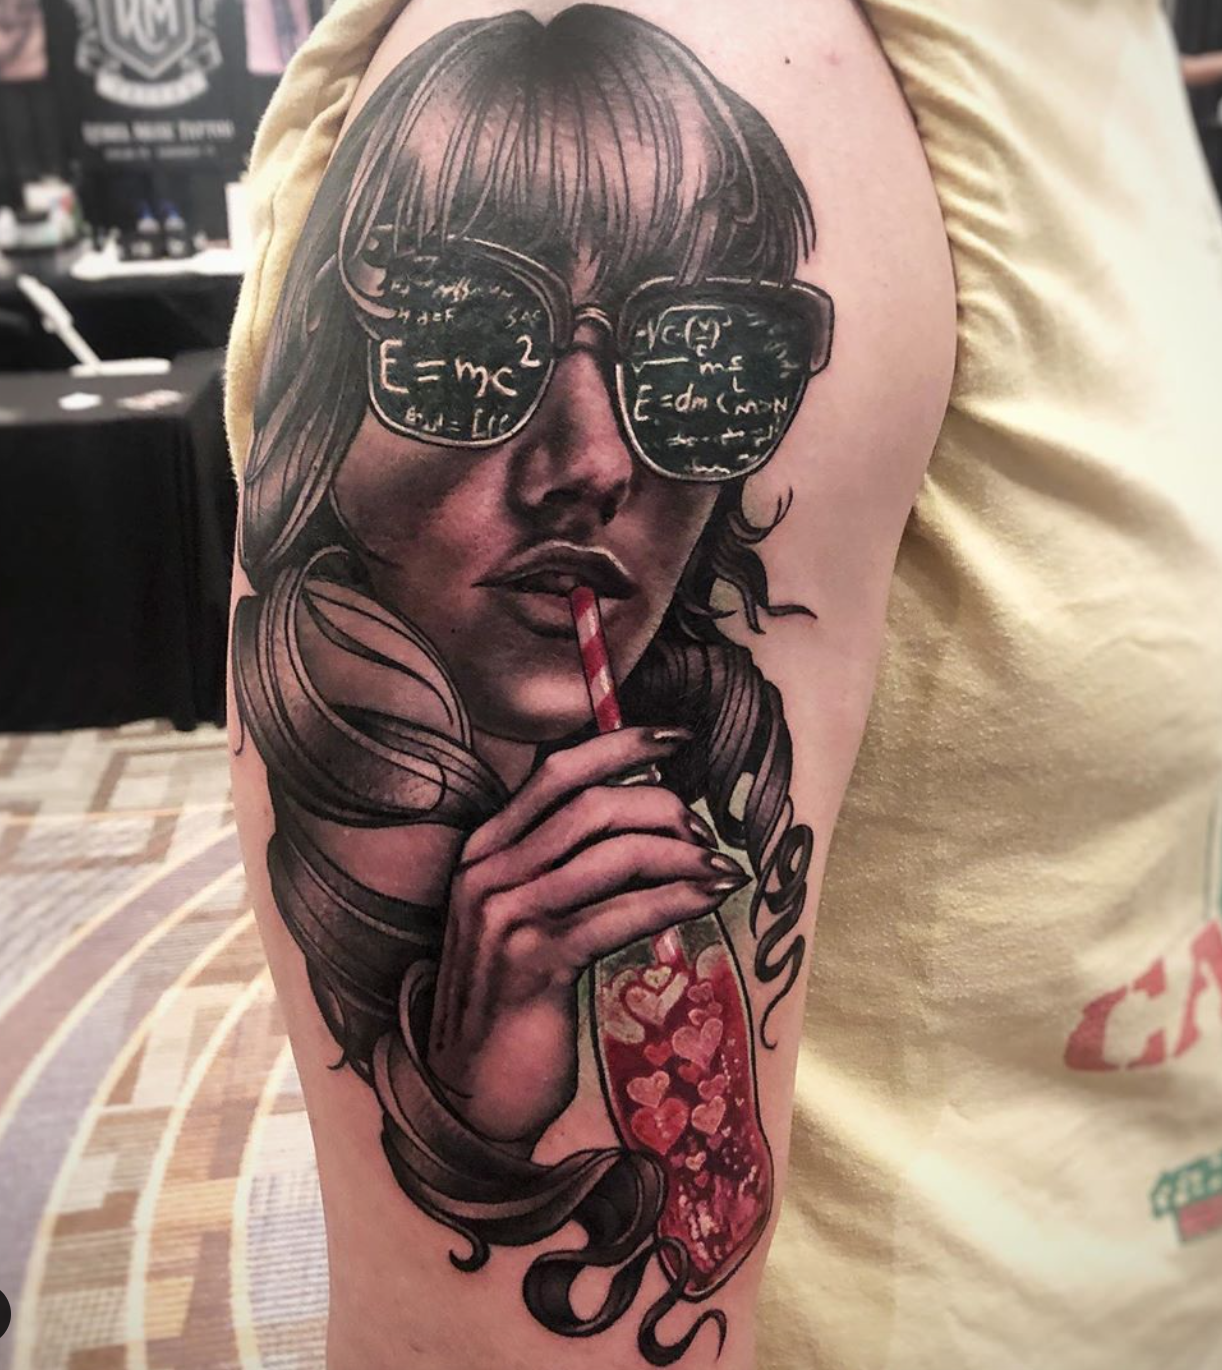 Lady face tattoo by Megan Jean Morris